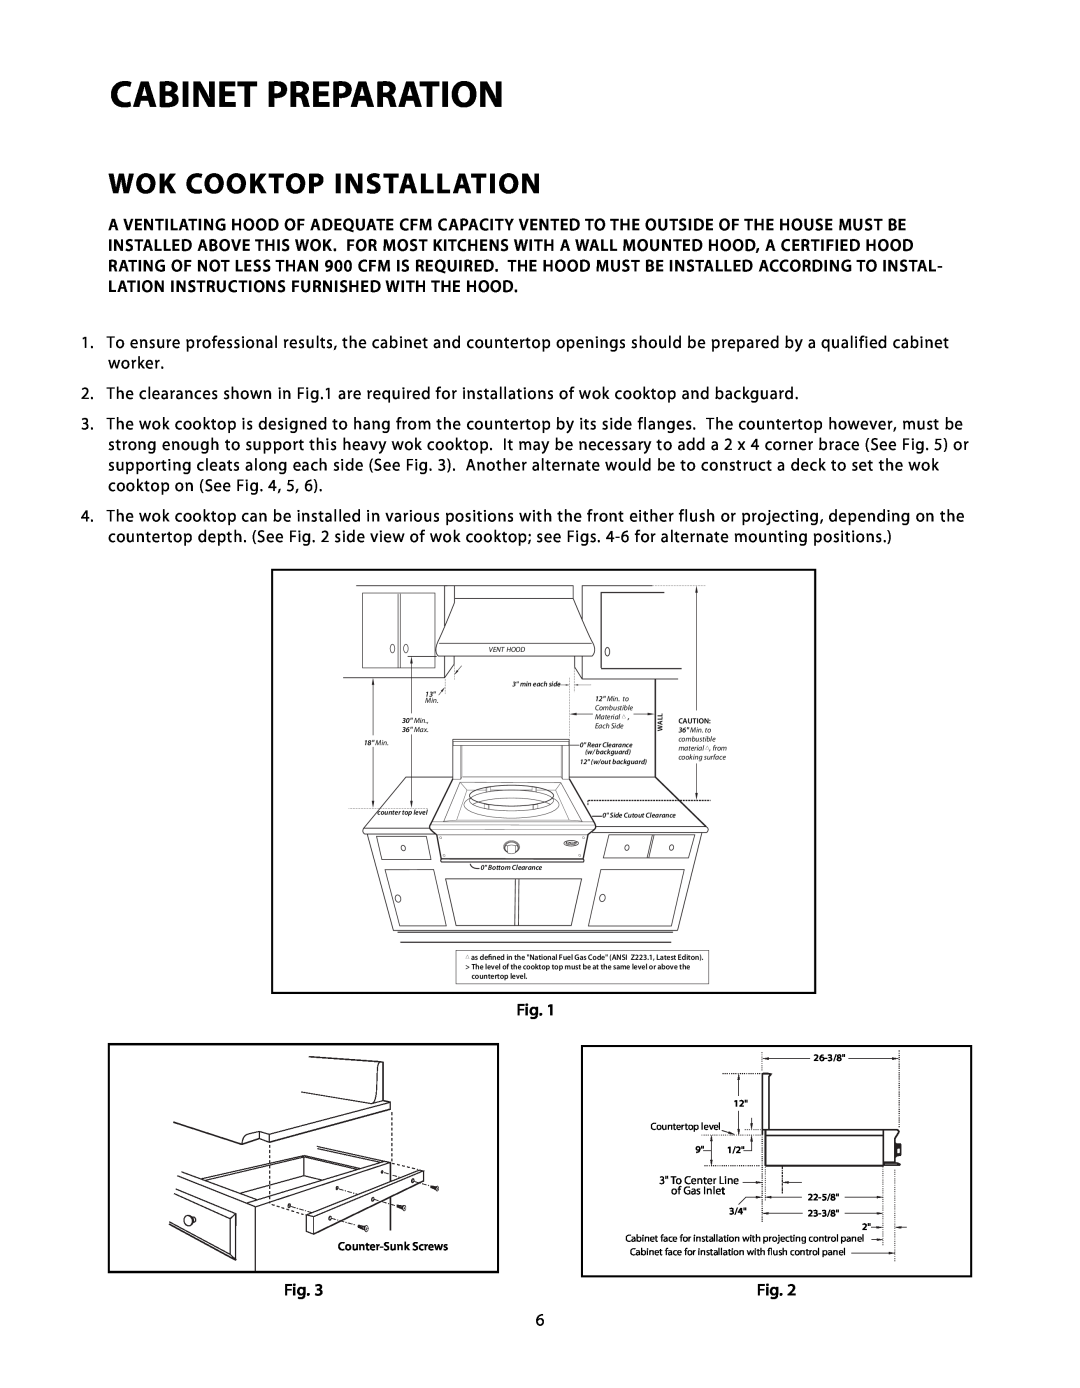 DCS C-24 installation instructions Cabinet Preparation, Wok Cooktop Installation 